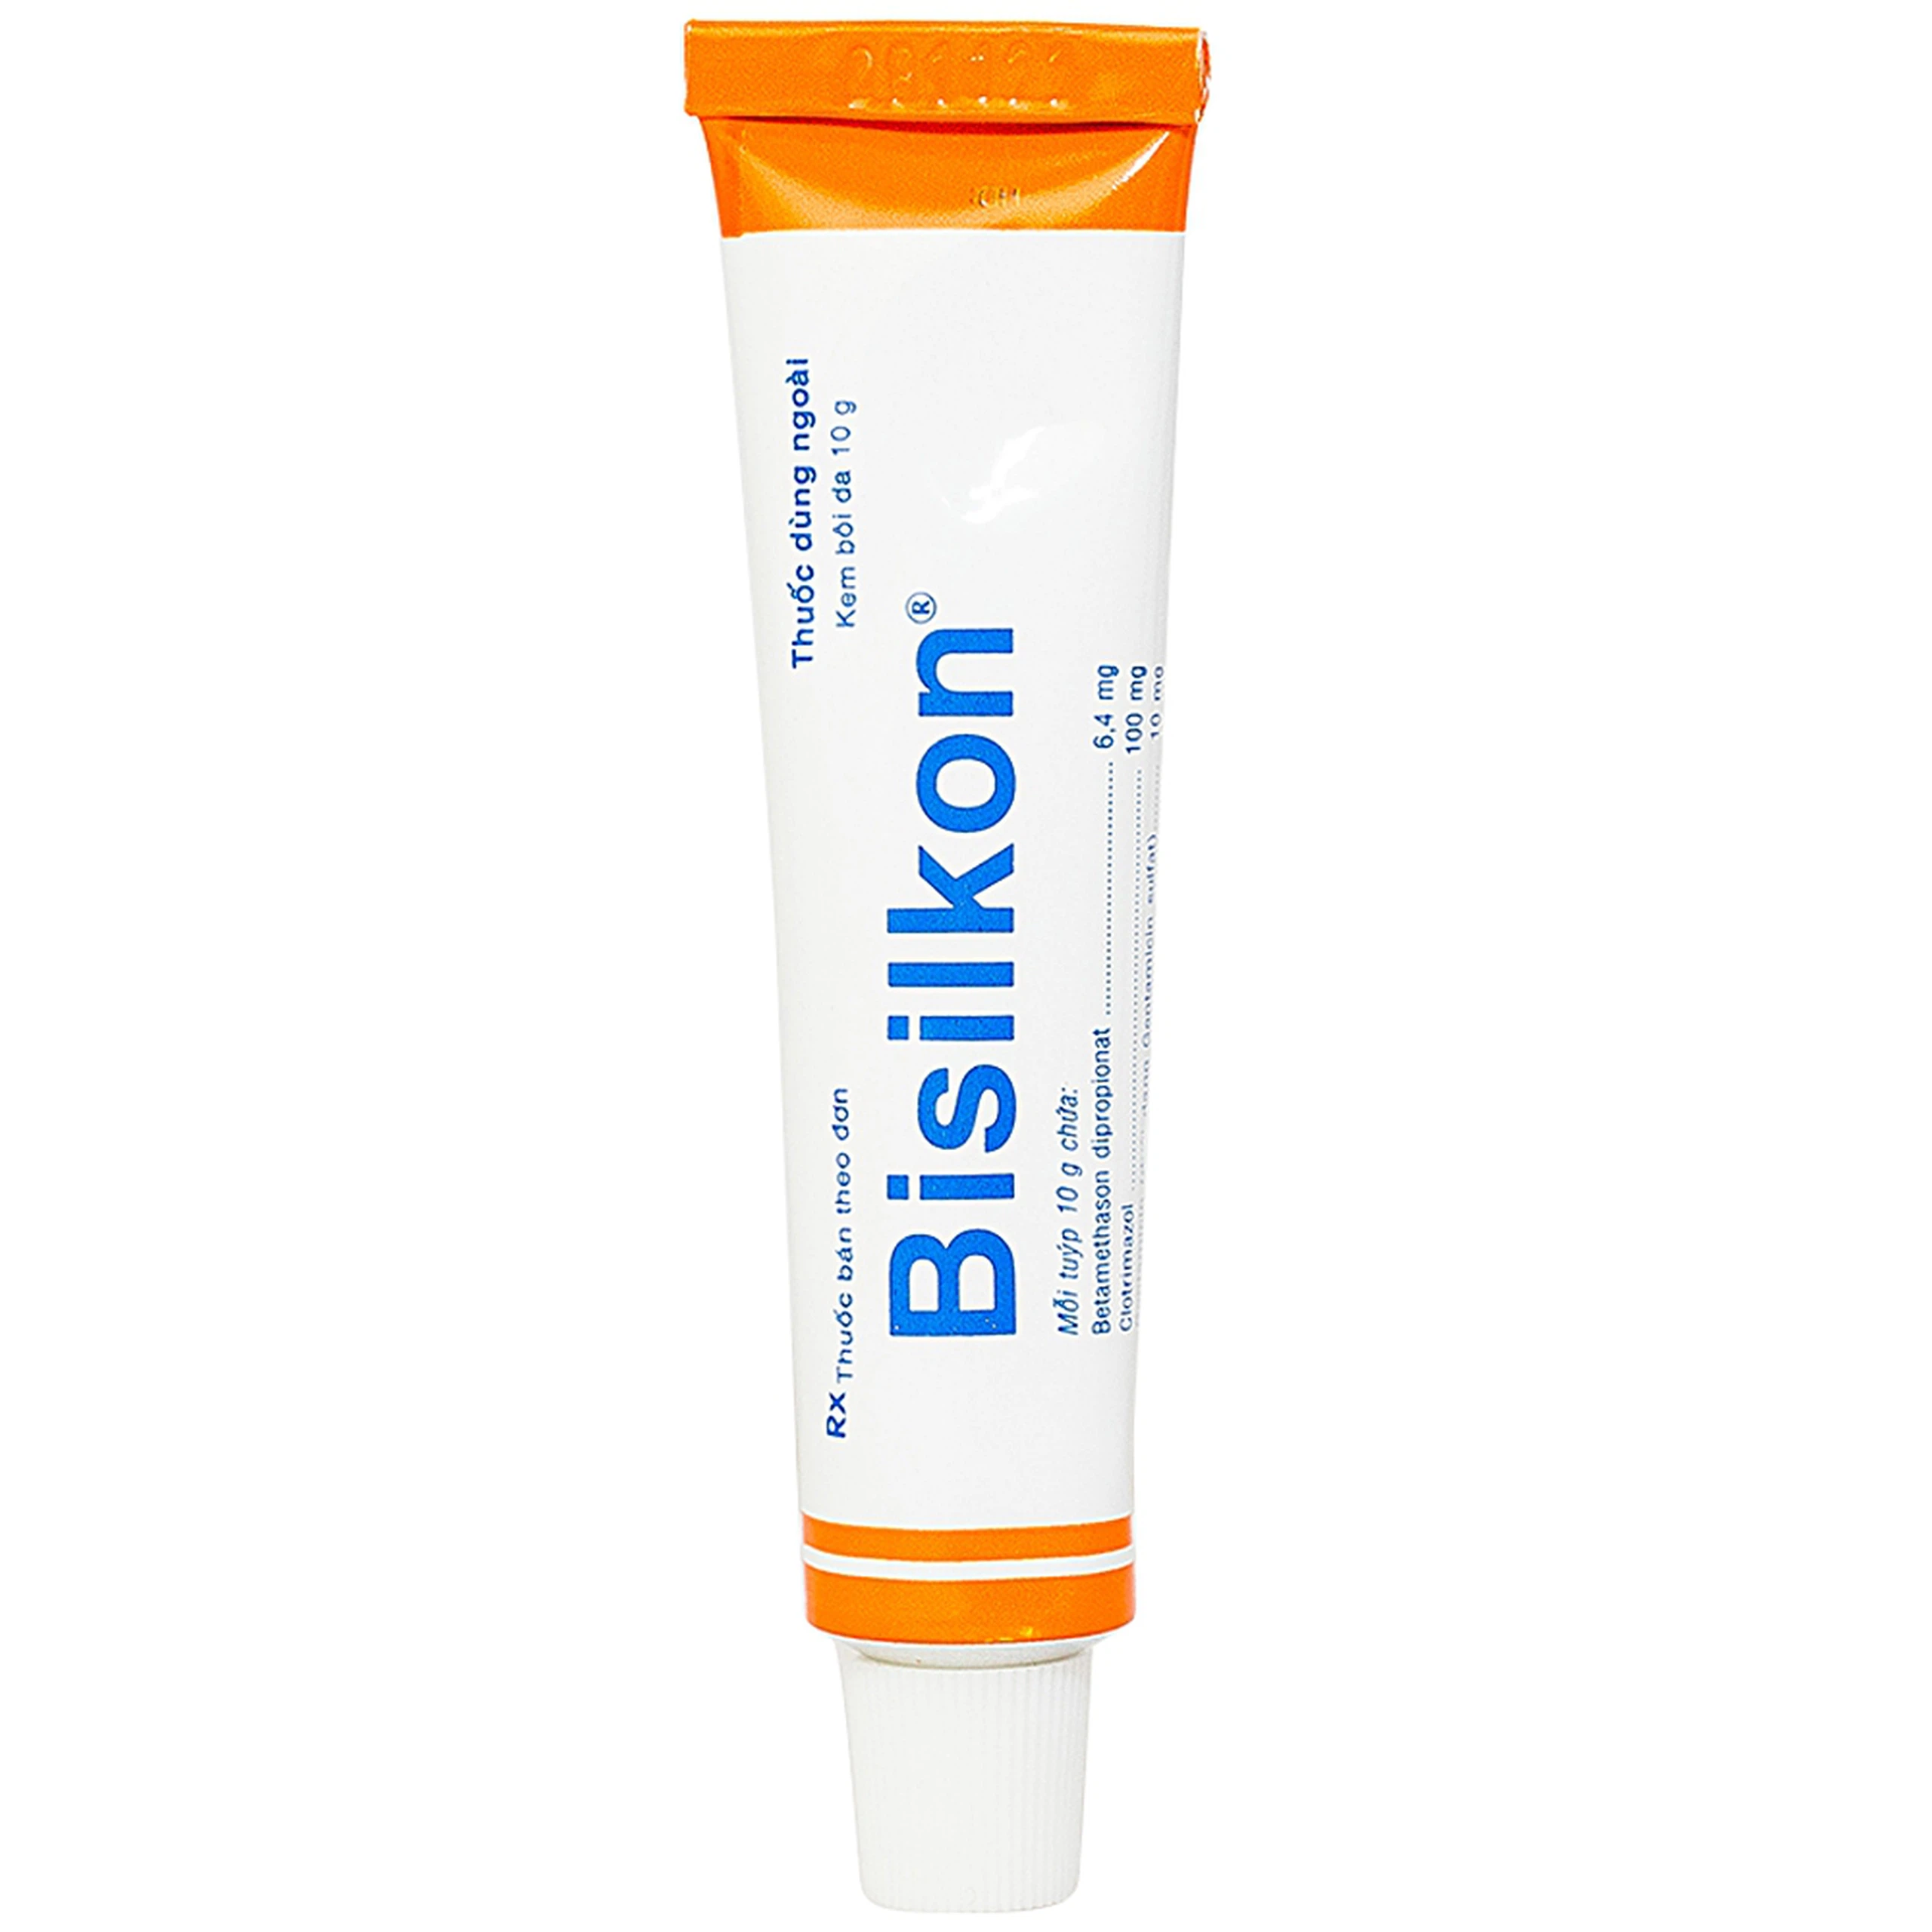 Kem bôi da Bisilkon Bidiphar điều trị các bệnh lý da, nhiễm trùng do vi khuẩn (10g)